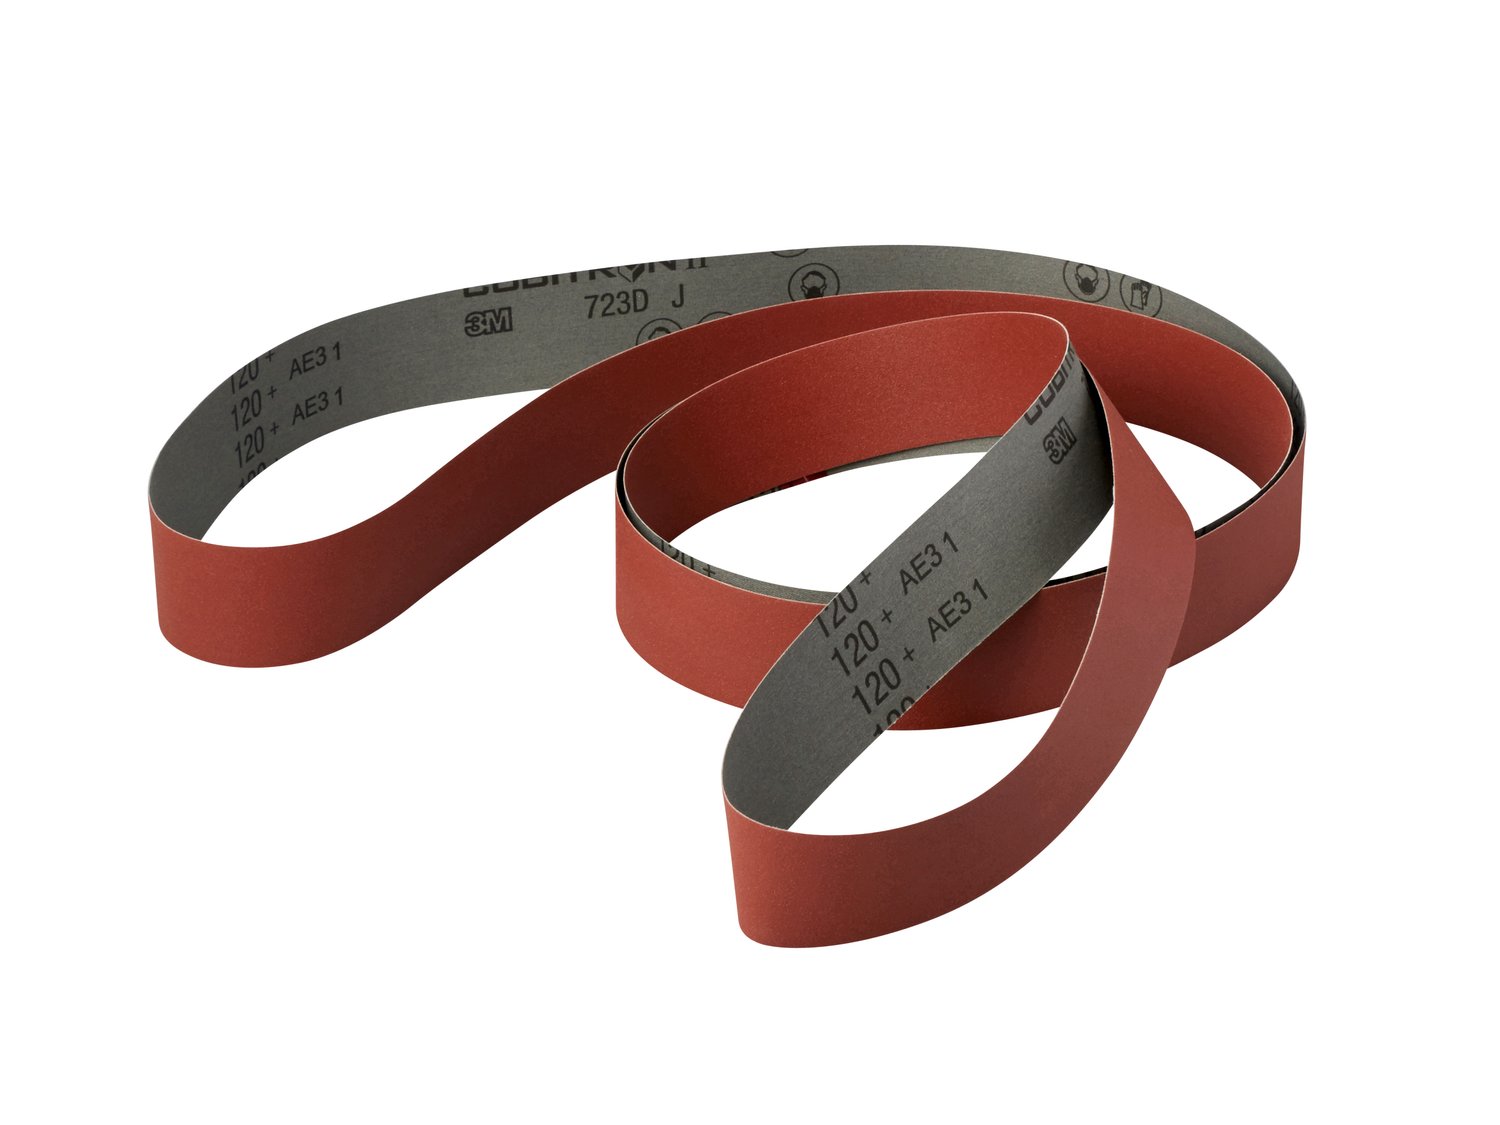 7010512401 - 3M Cubitron ll Cloth Belt 723D, 150+ J-weight, 5-1/2 in x 110 in,
Film-lok, Full-flex